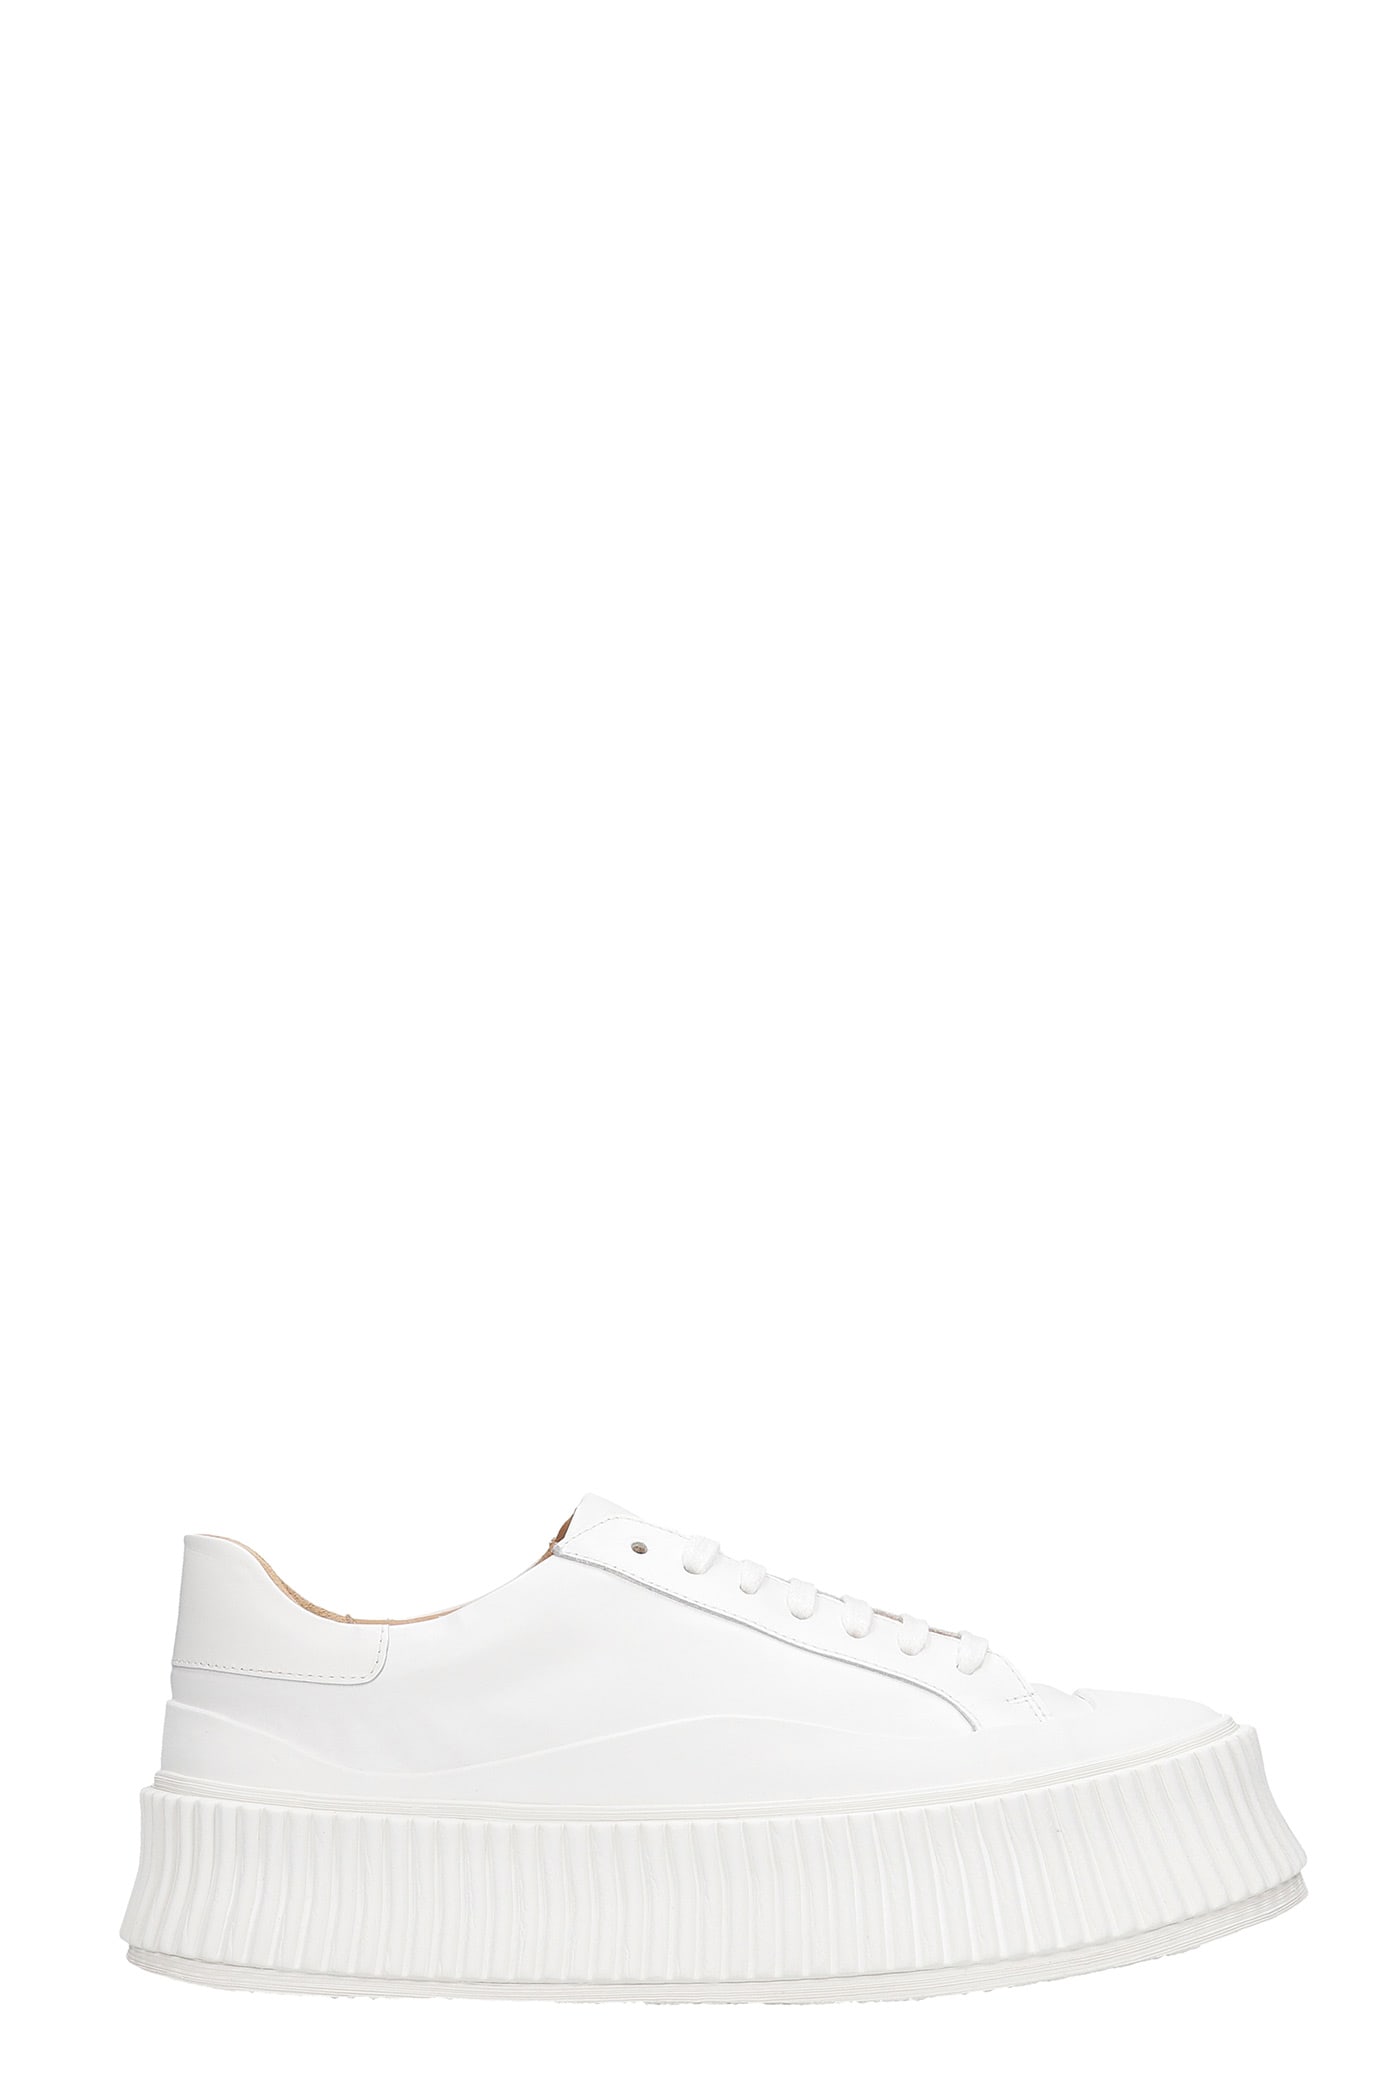 Jil Sander Sneakers In White Leather